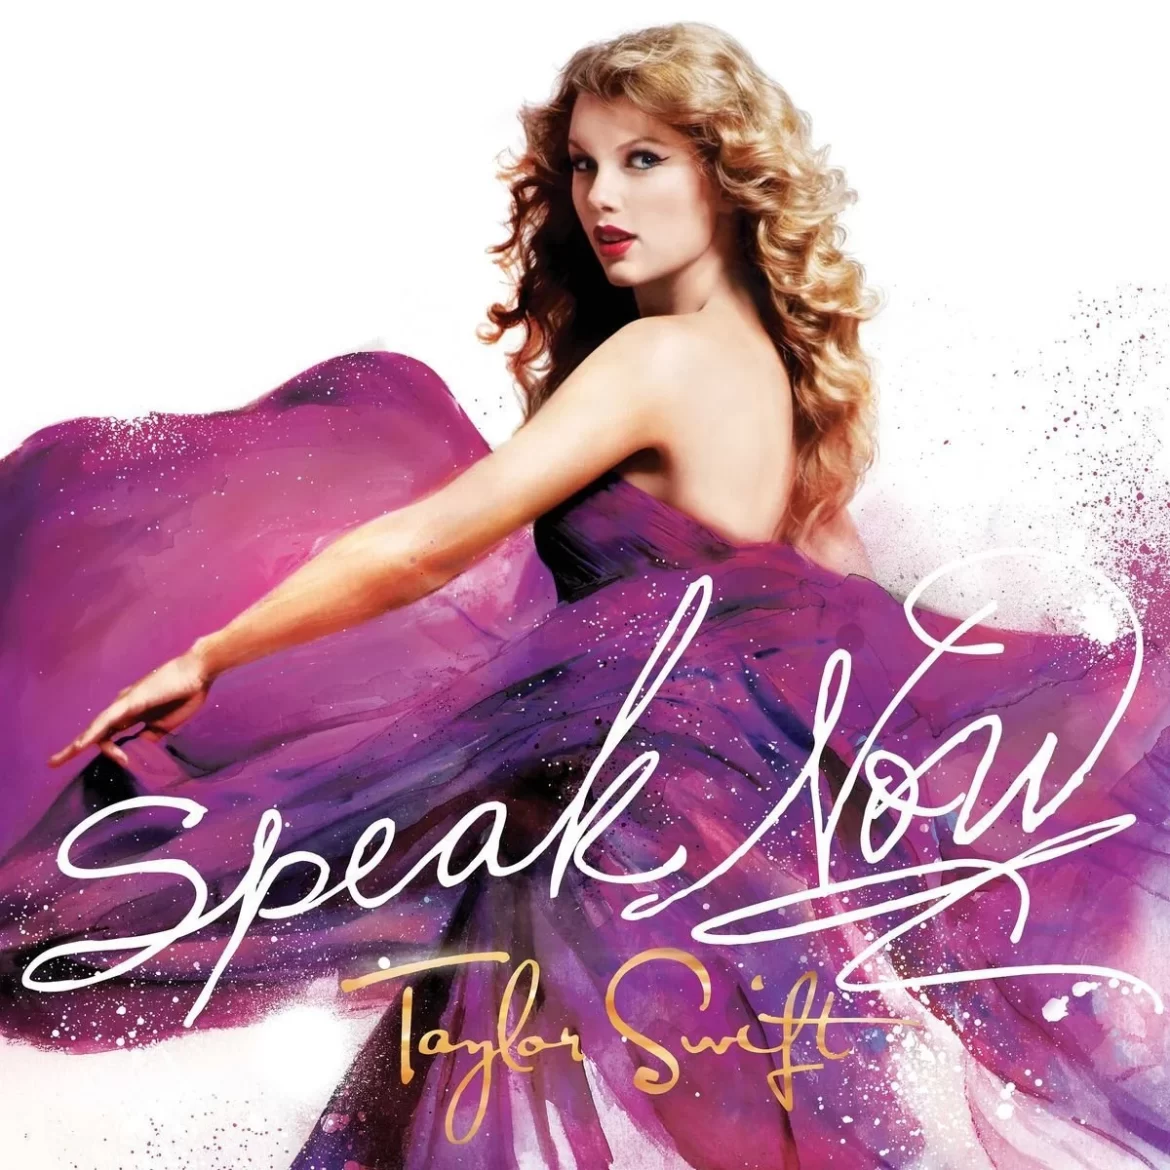 Ranking Speak Now by Taylor Swift